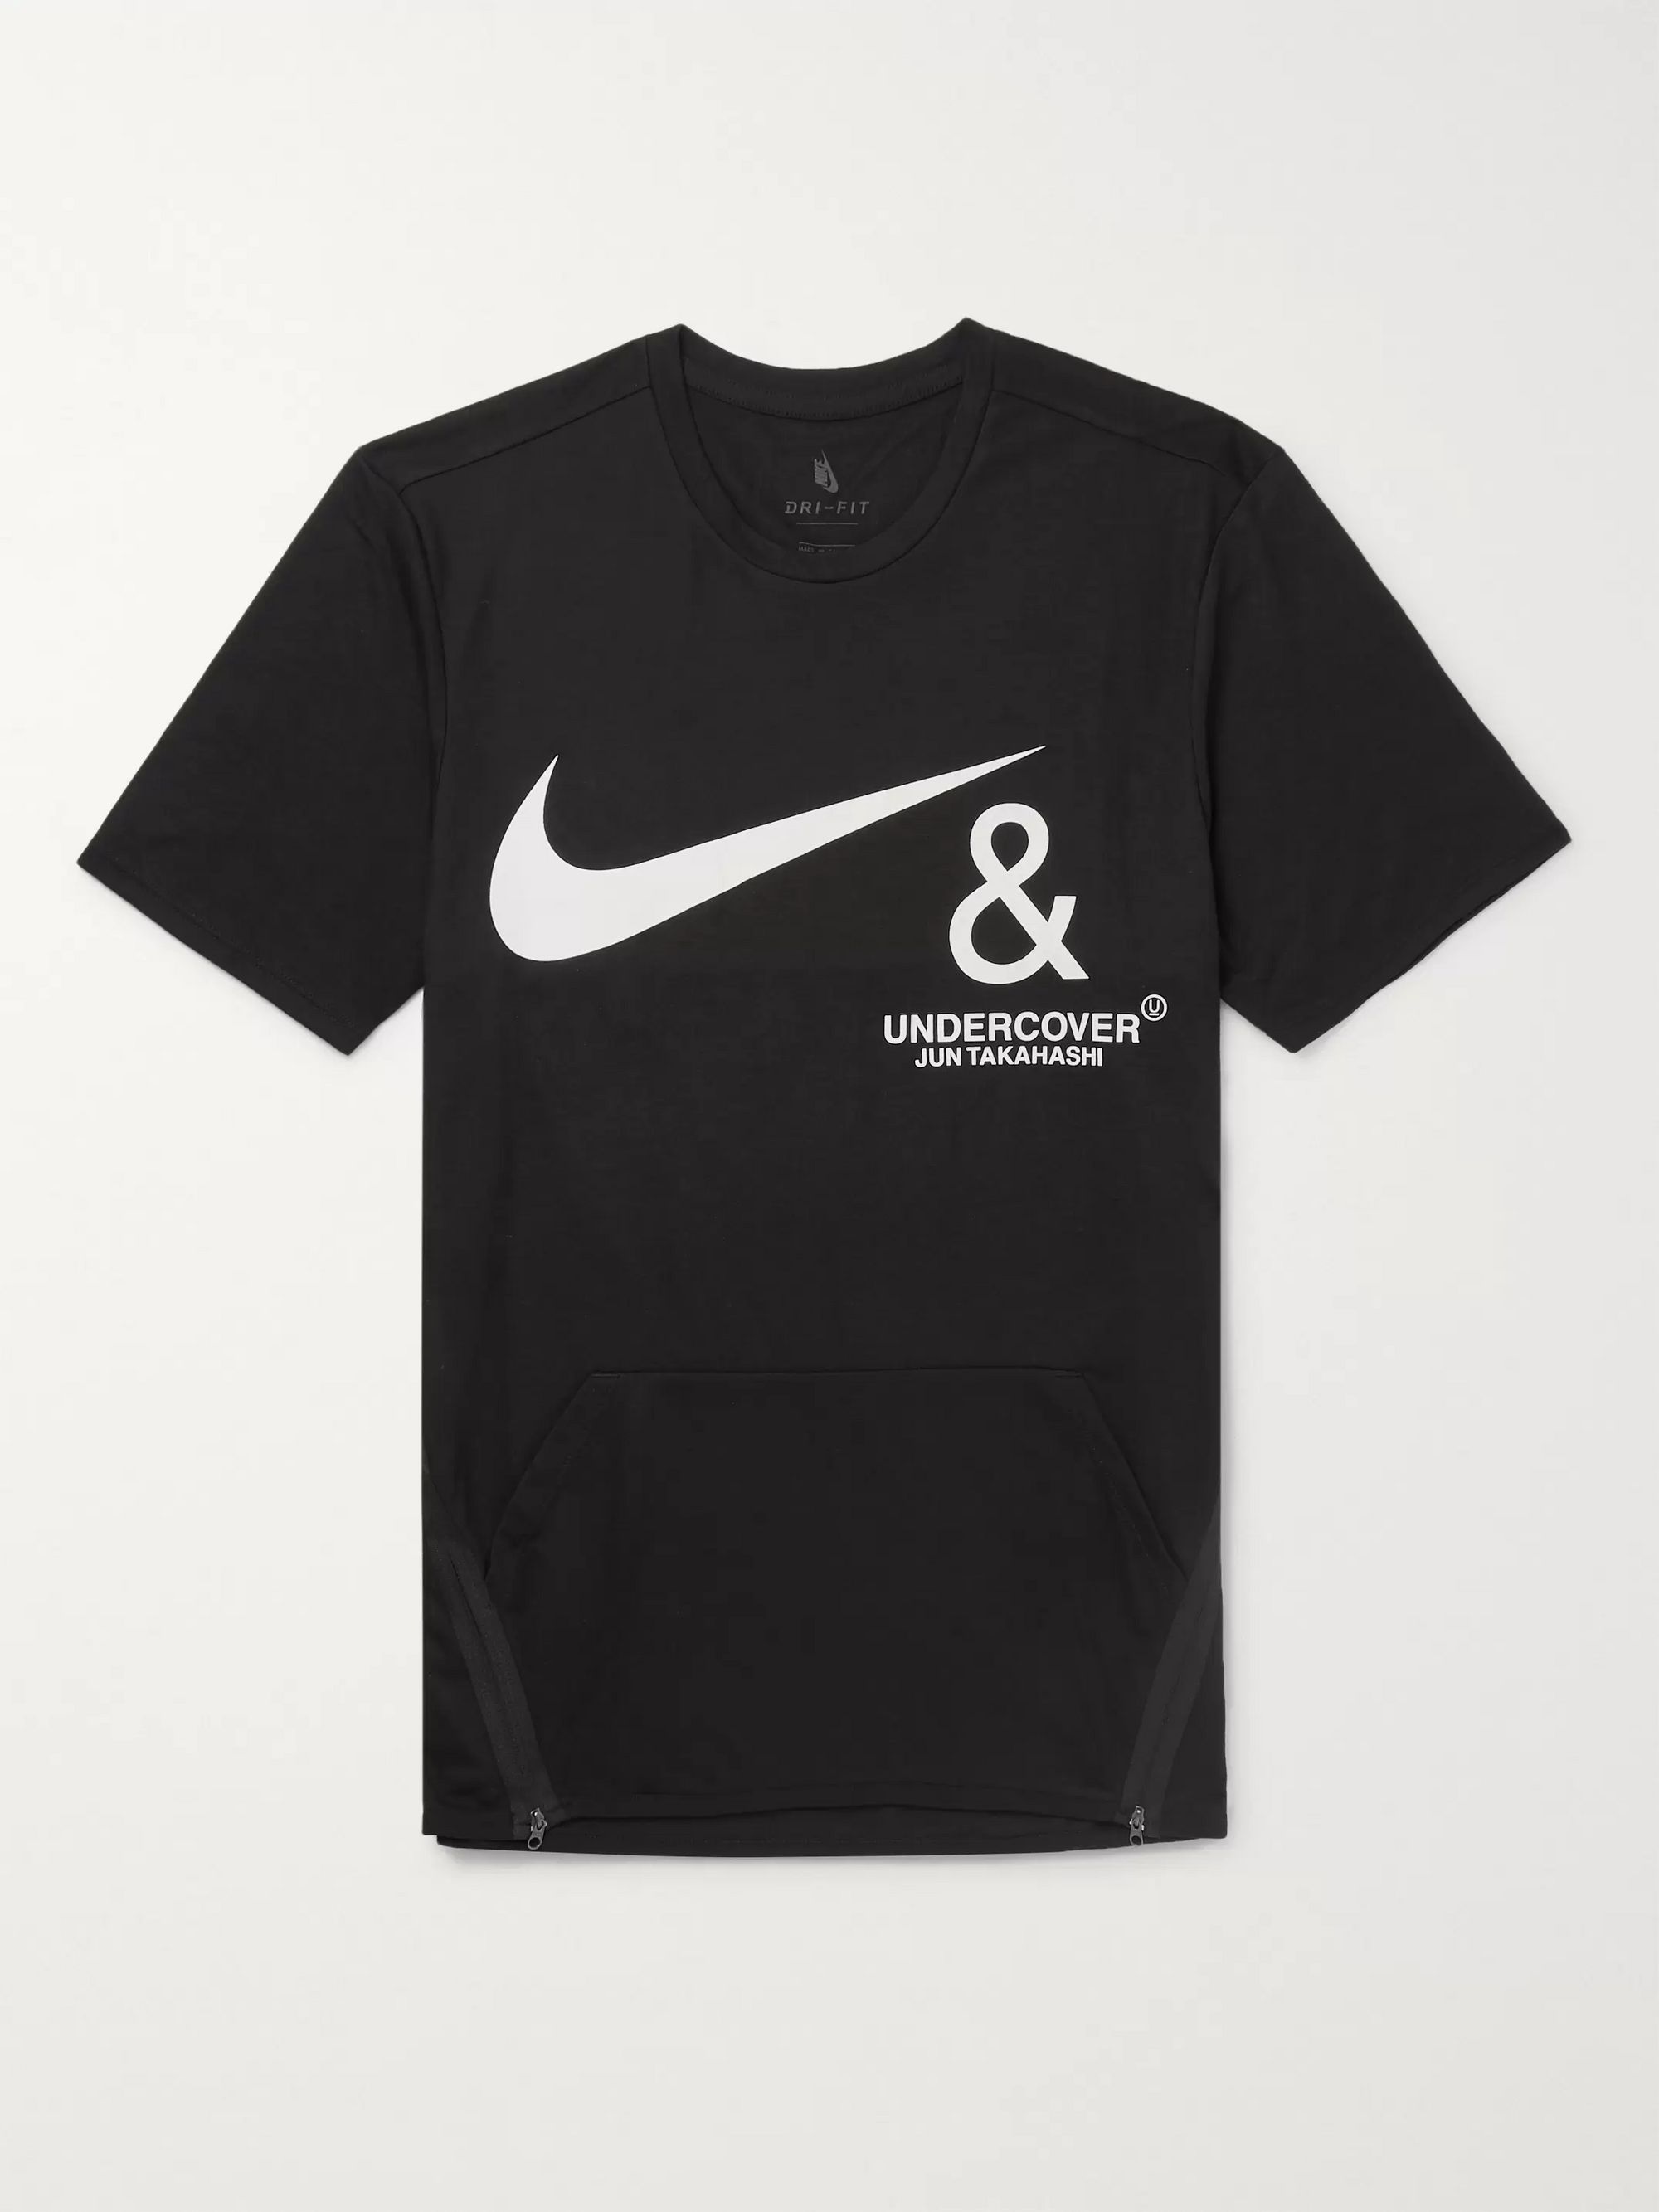 Nike Athletic Cut T Shirt Size Chart